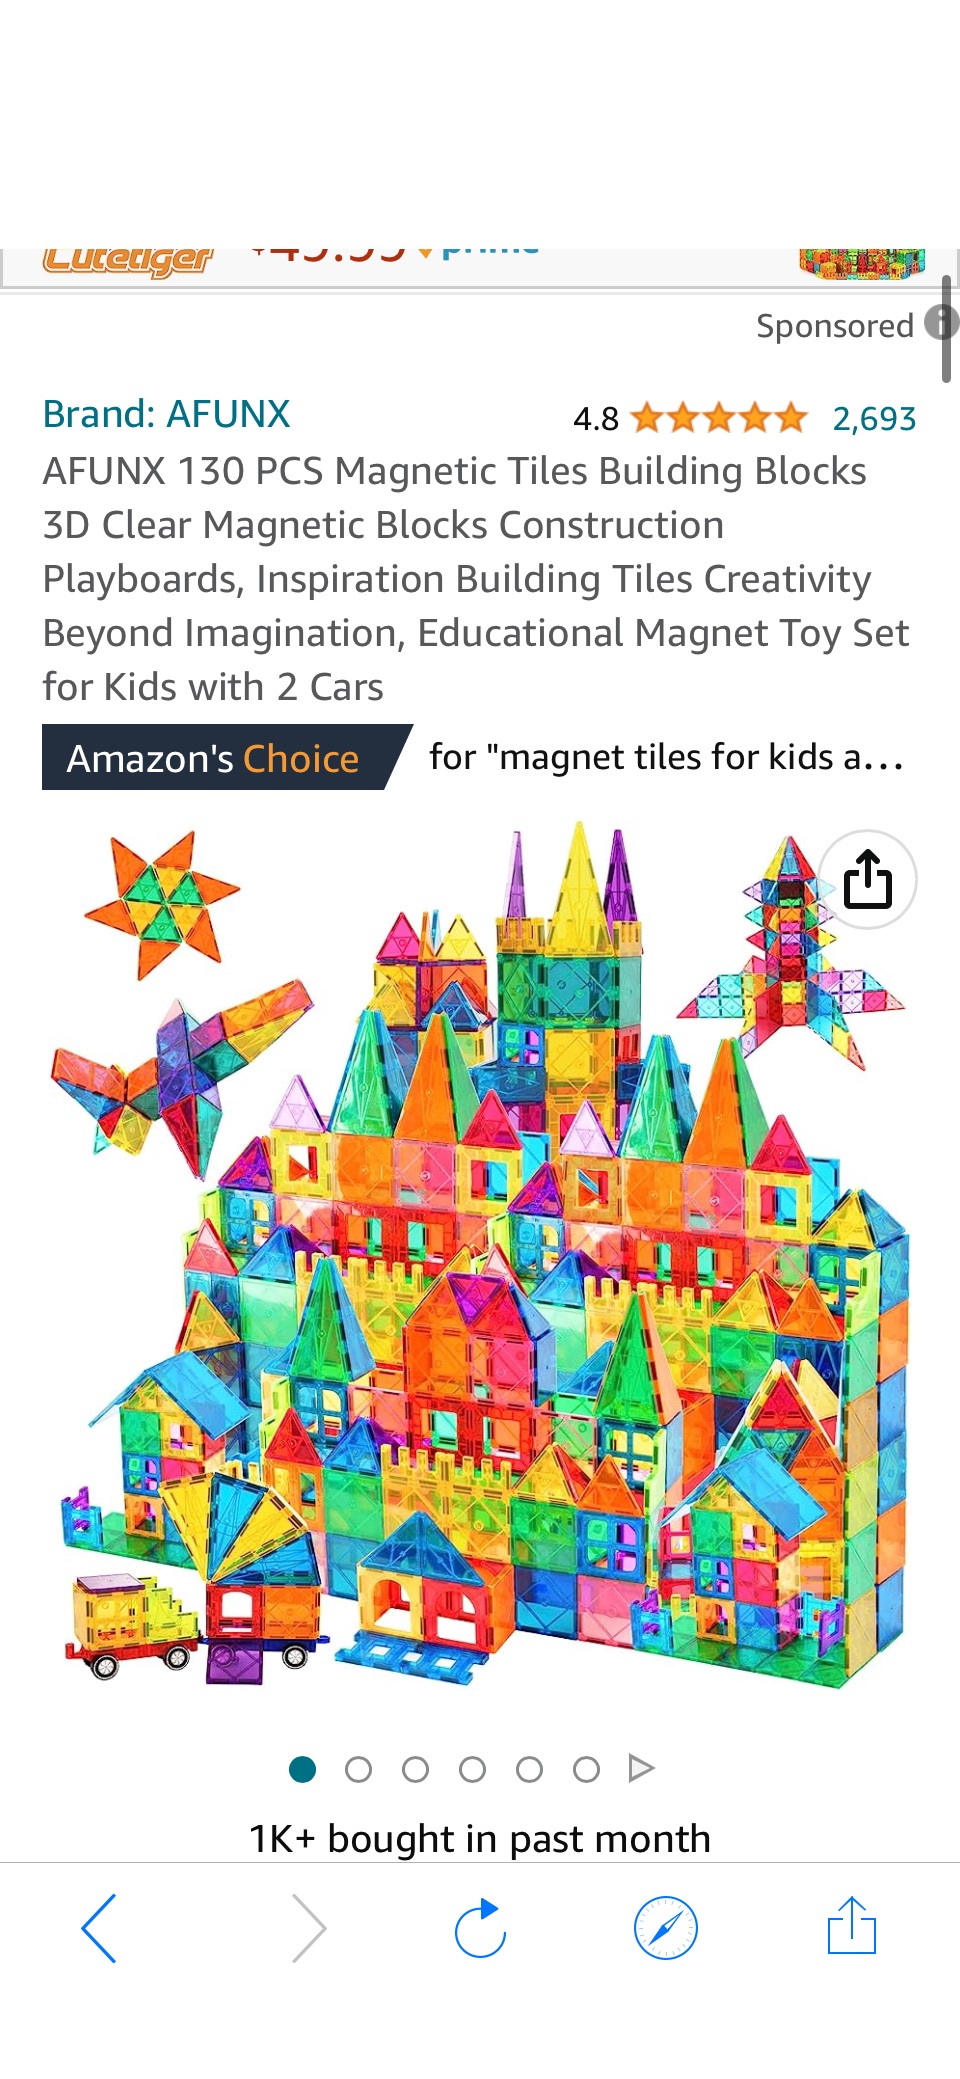 Amazon.com: AFUNX 130 PCS Magnetic Tiles Building Blocks 3D Clear Magnetic Blocks Construction Playboards, Inspiration Building Tiles Creativity Beyond原价59.99